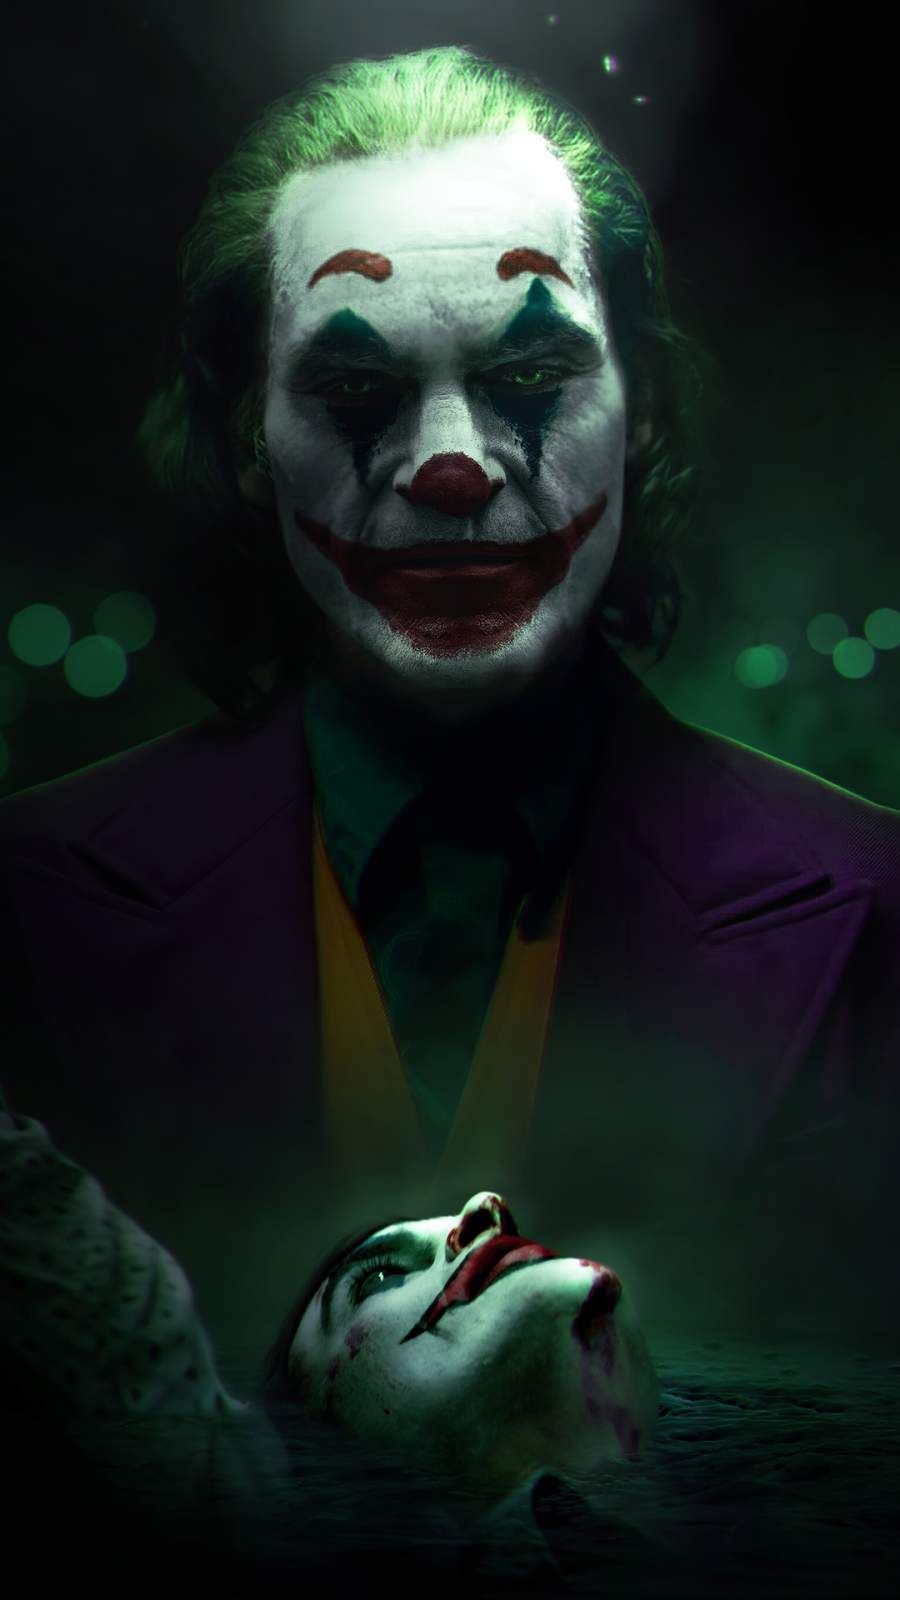 Joker 2020 iPhone Wallpaper. Joker wallpaper, Joker artwork, Joker art